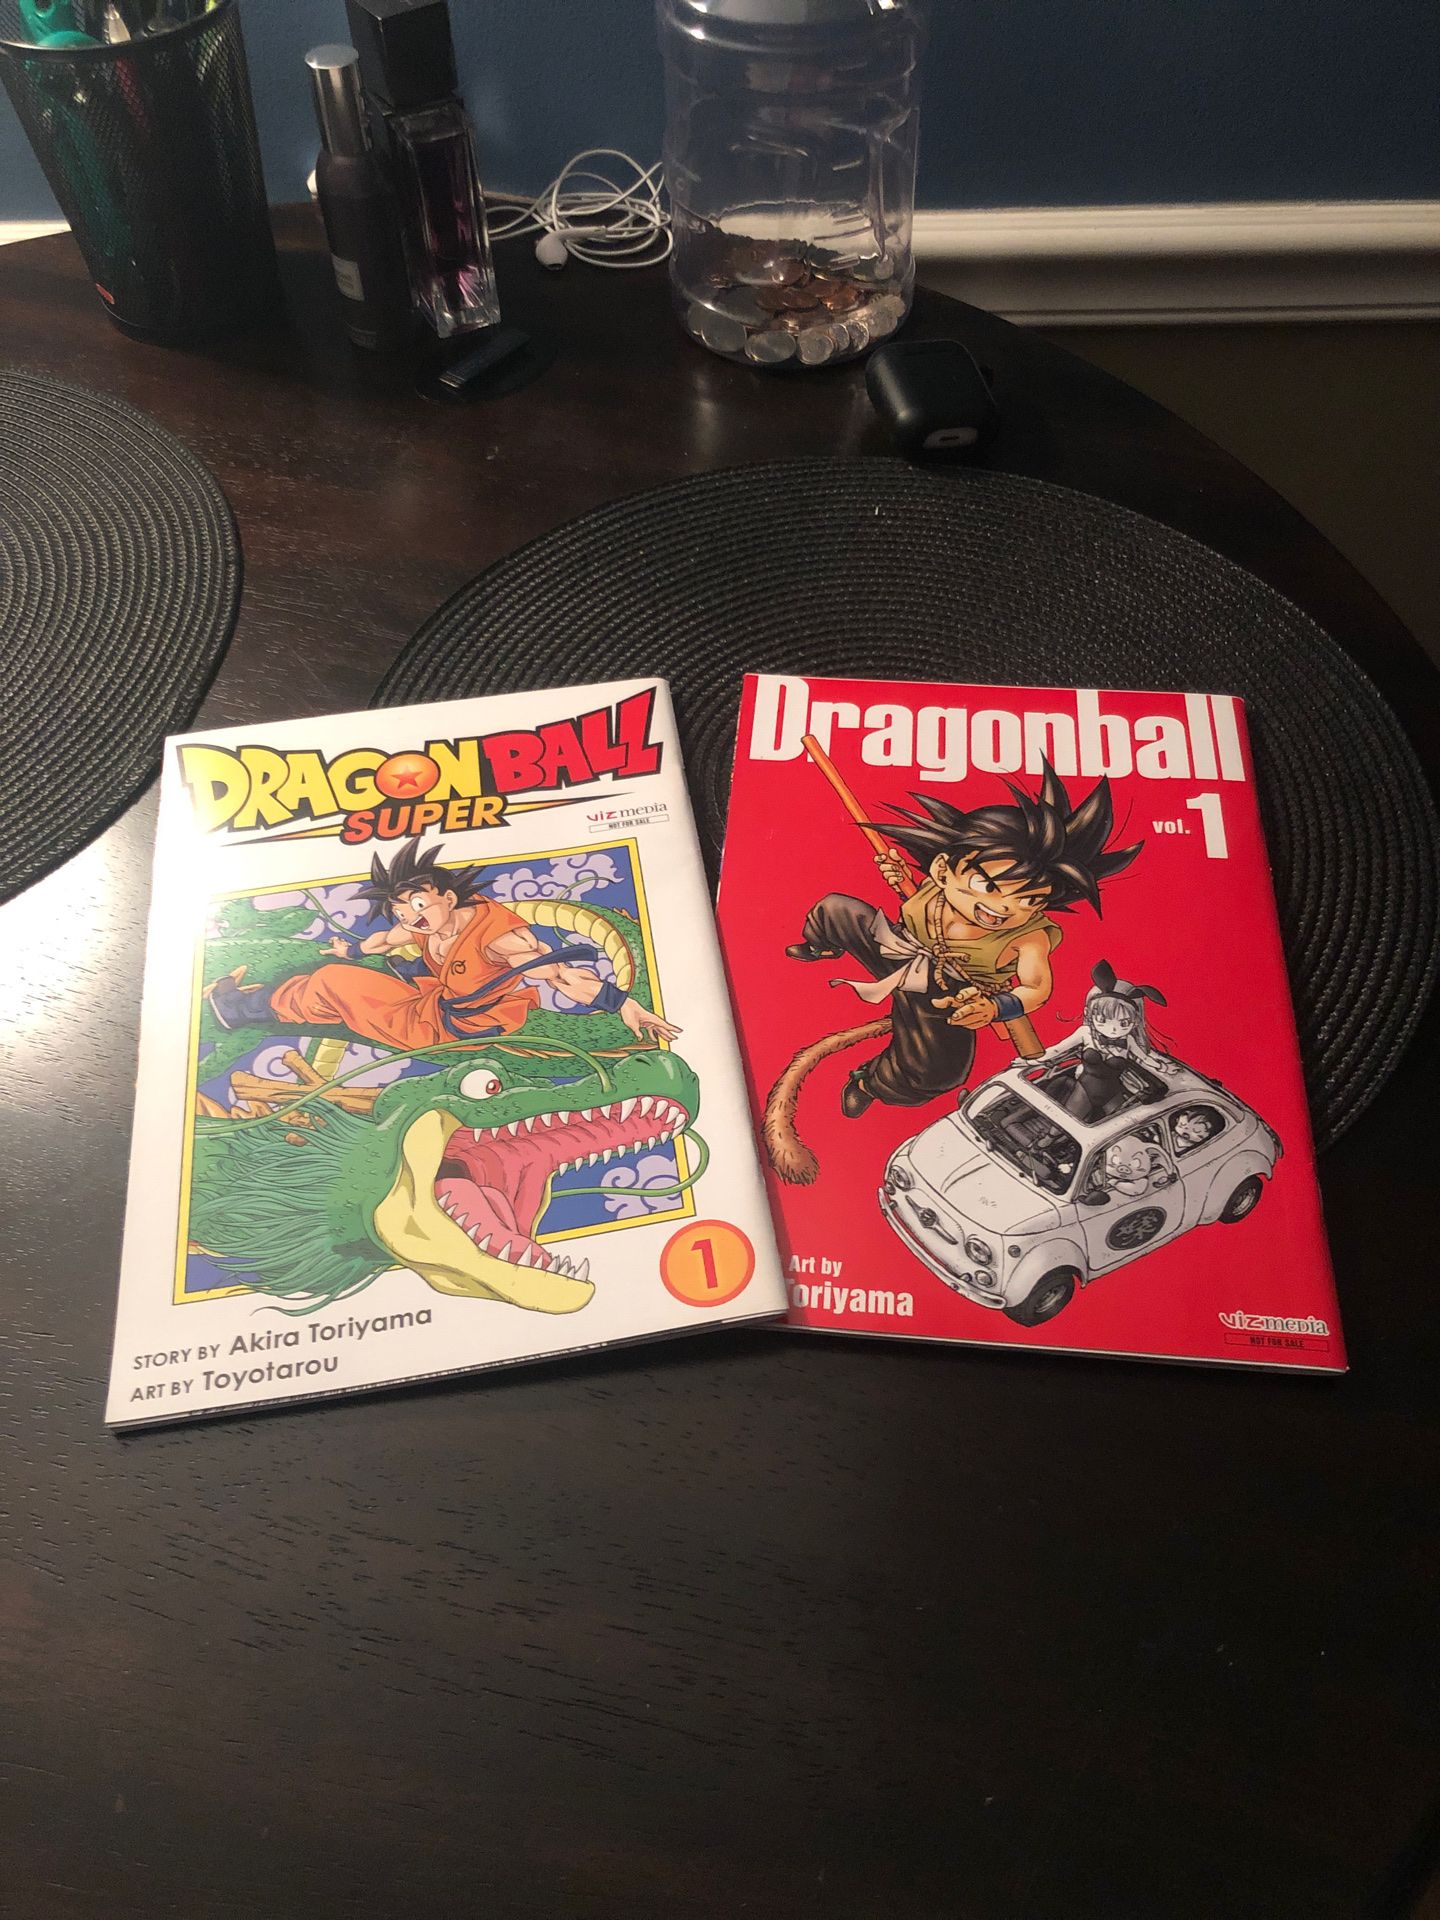 Dragonball & Super Volume 1 manga issues